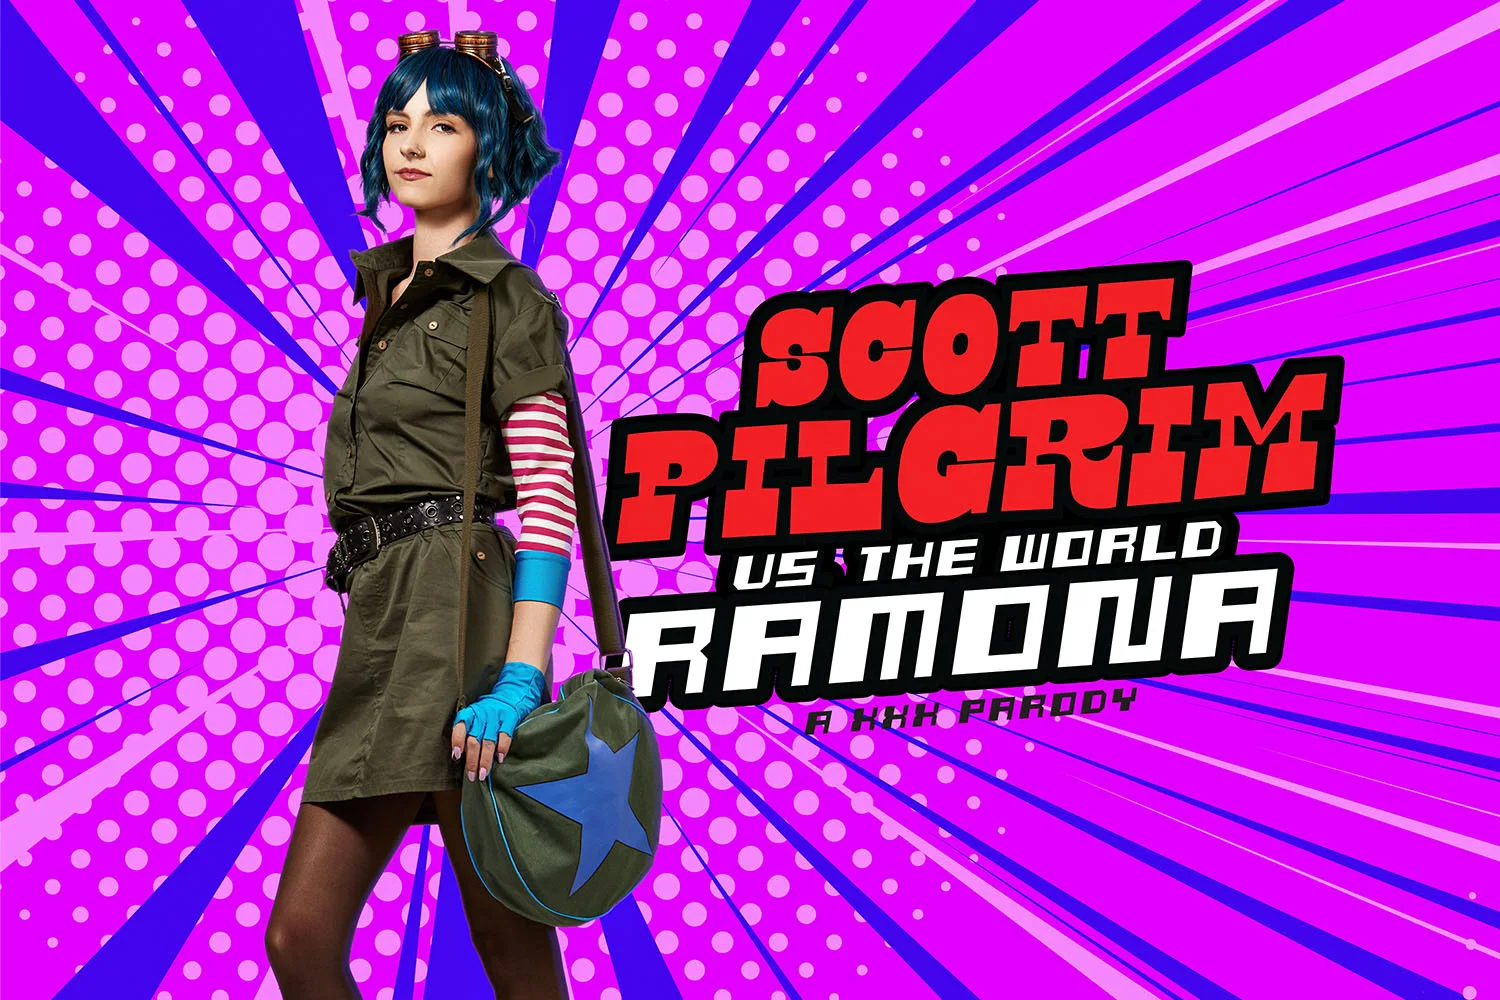 [2023-03-23] Scott Pilgrim vs. The World: Ramona Flowers A XXX Parody - VRCosplayX